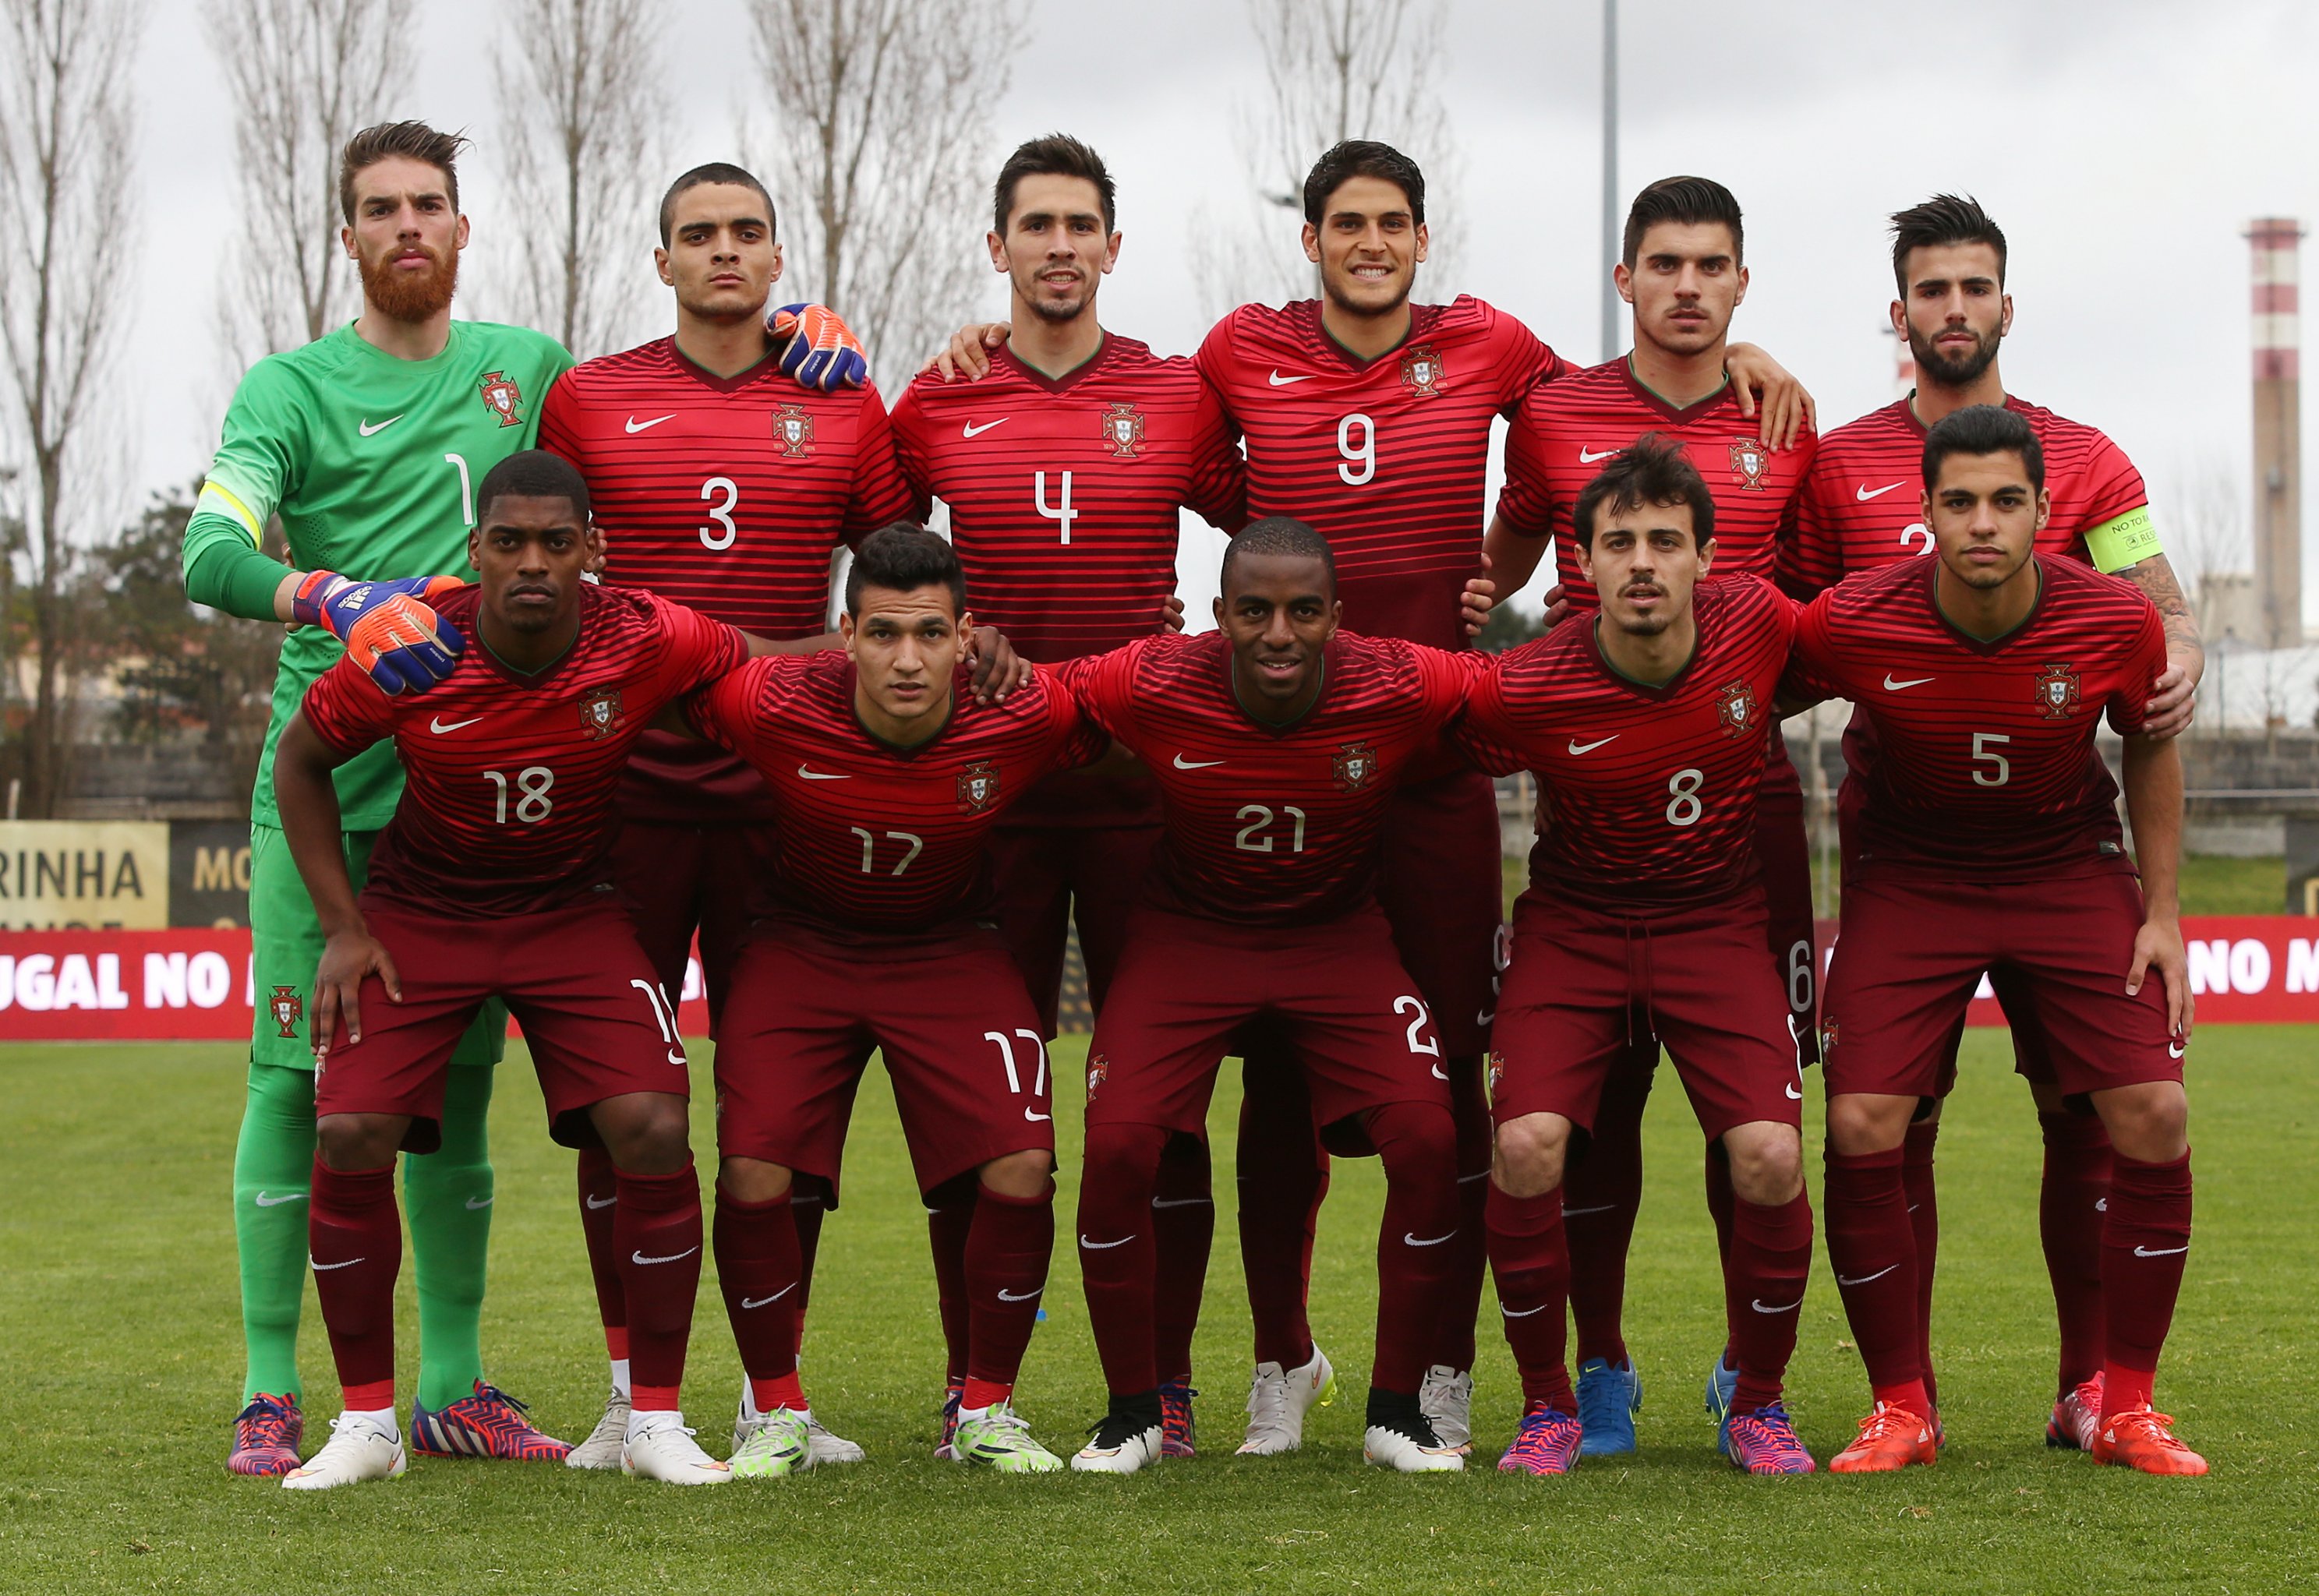 European U21 Championship 2015 Portugal Team Guide Bleacher Report Latest News Videos And Highlights